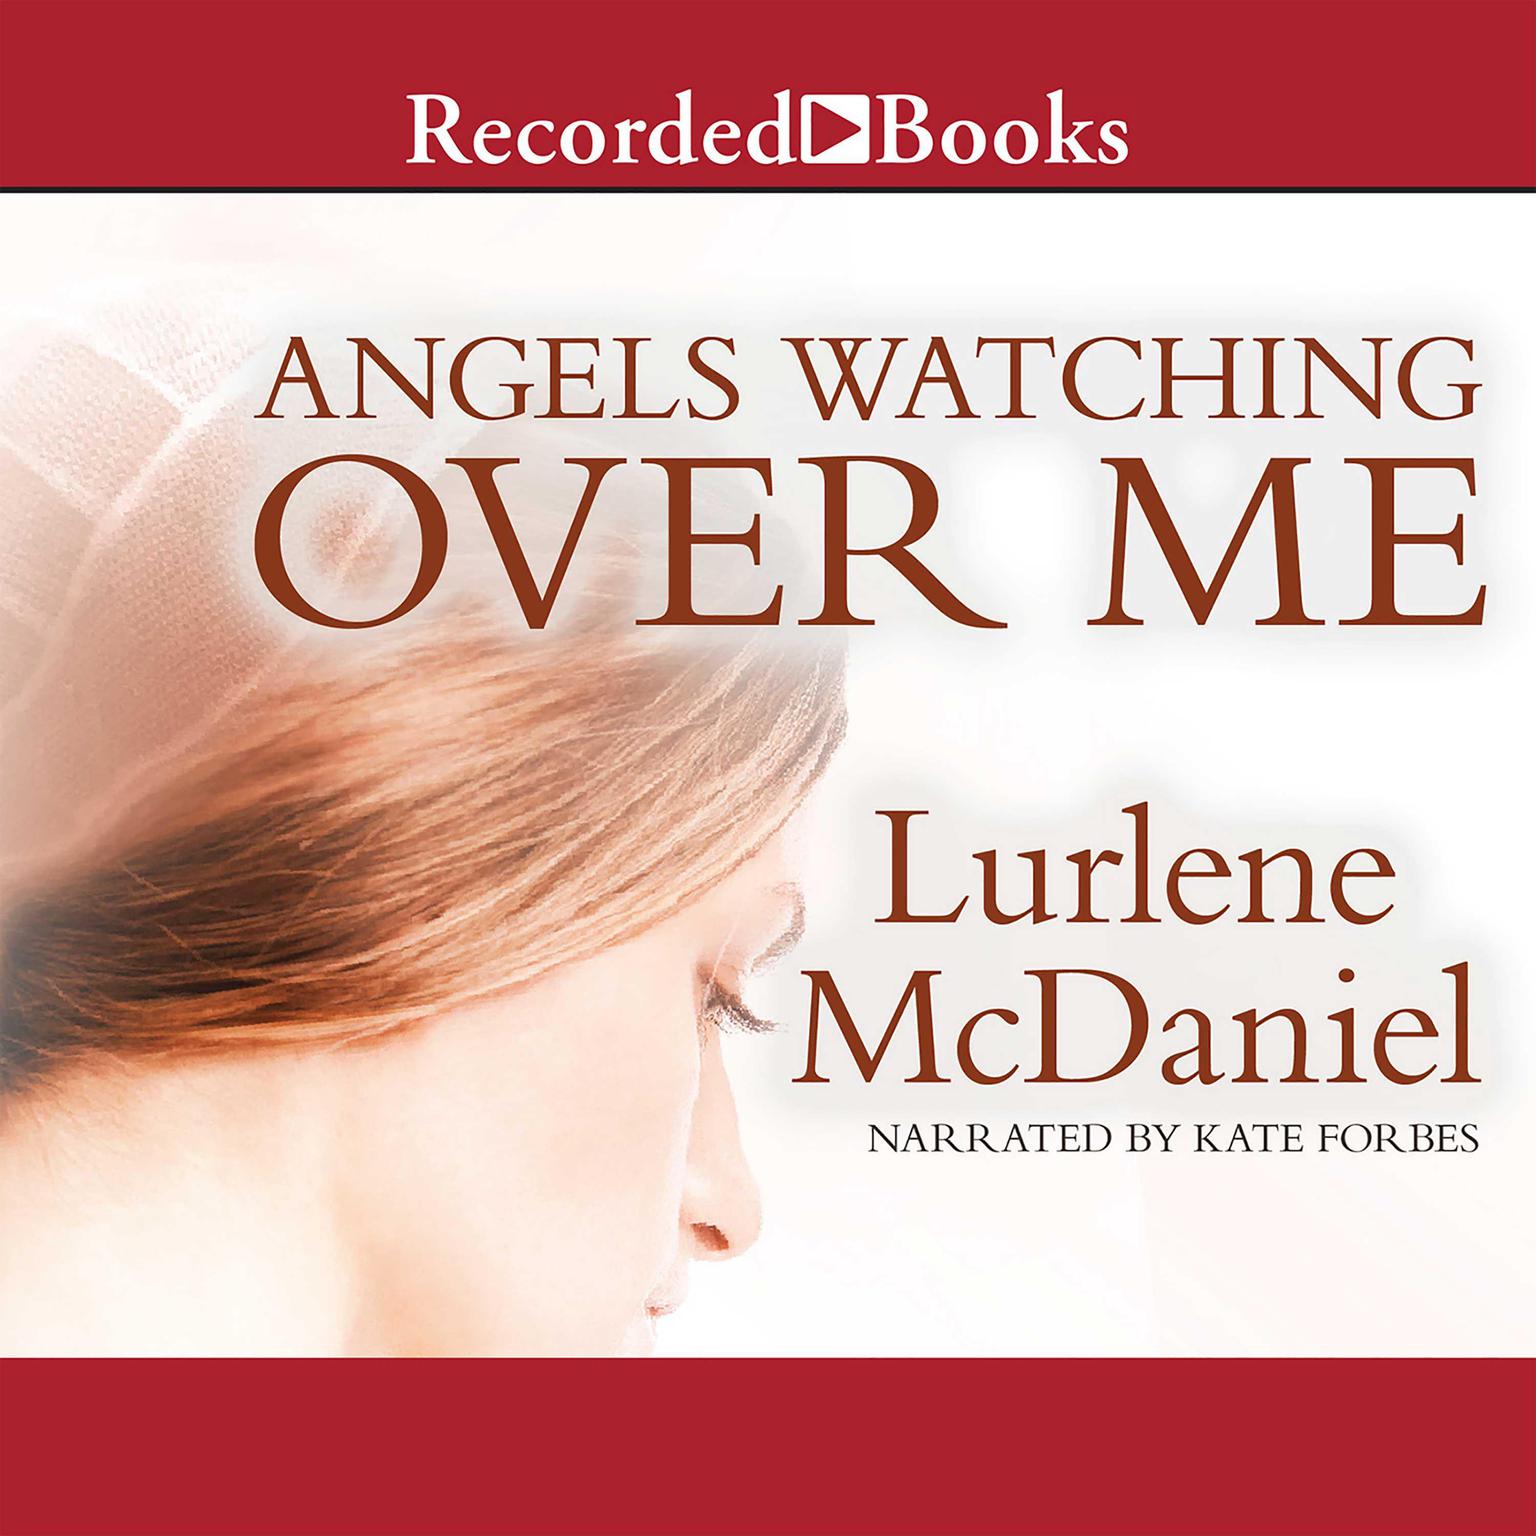 Lurlene mcdaniel books free download for pc